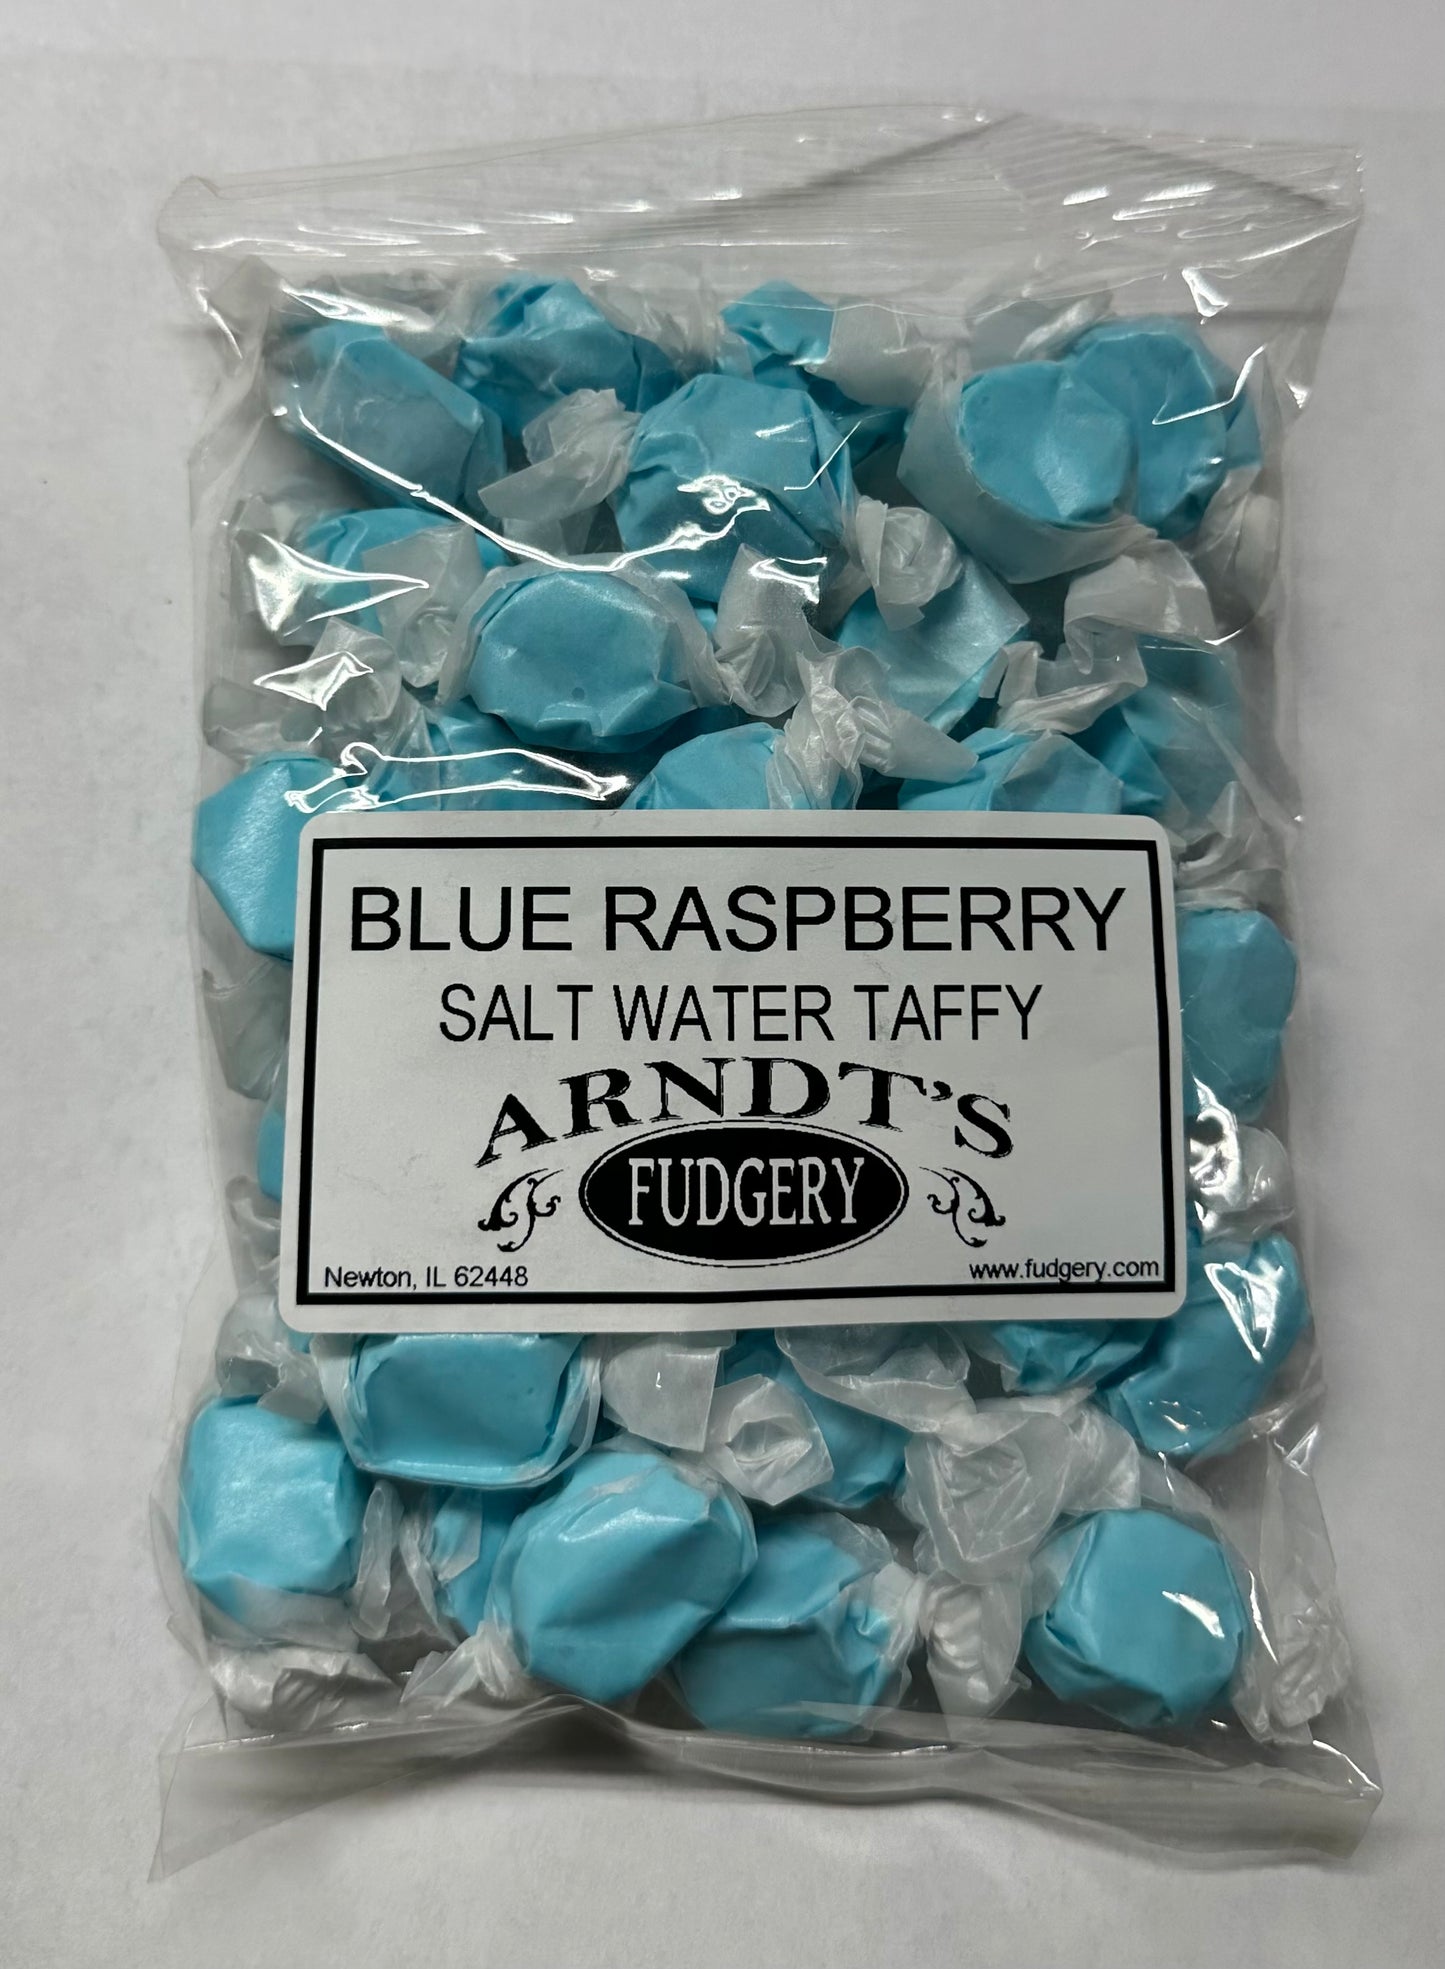 Arndt's Fudgery Blue Raspberry Salt Water Taffy